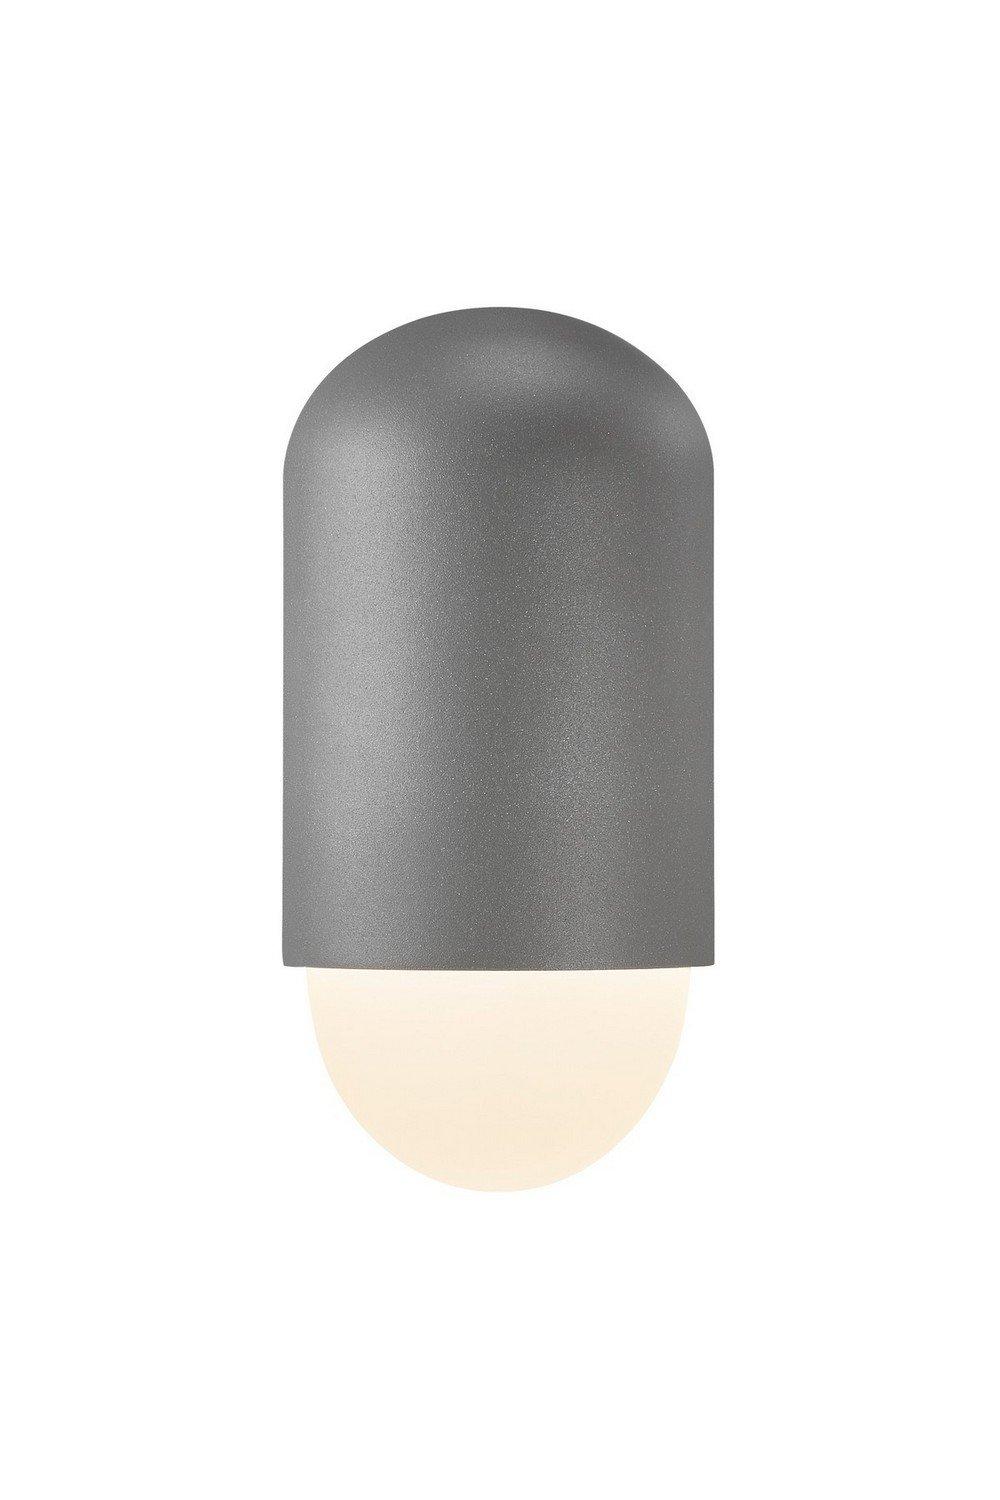 Heka Outdoor Modern Wall Lamp Grey E27 IP54